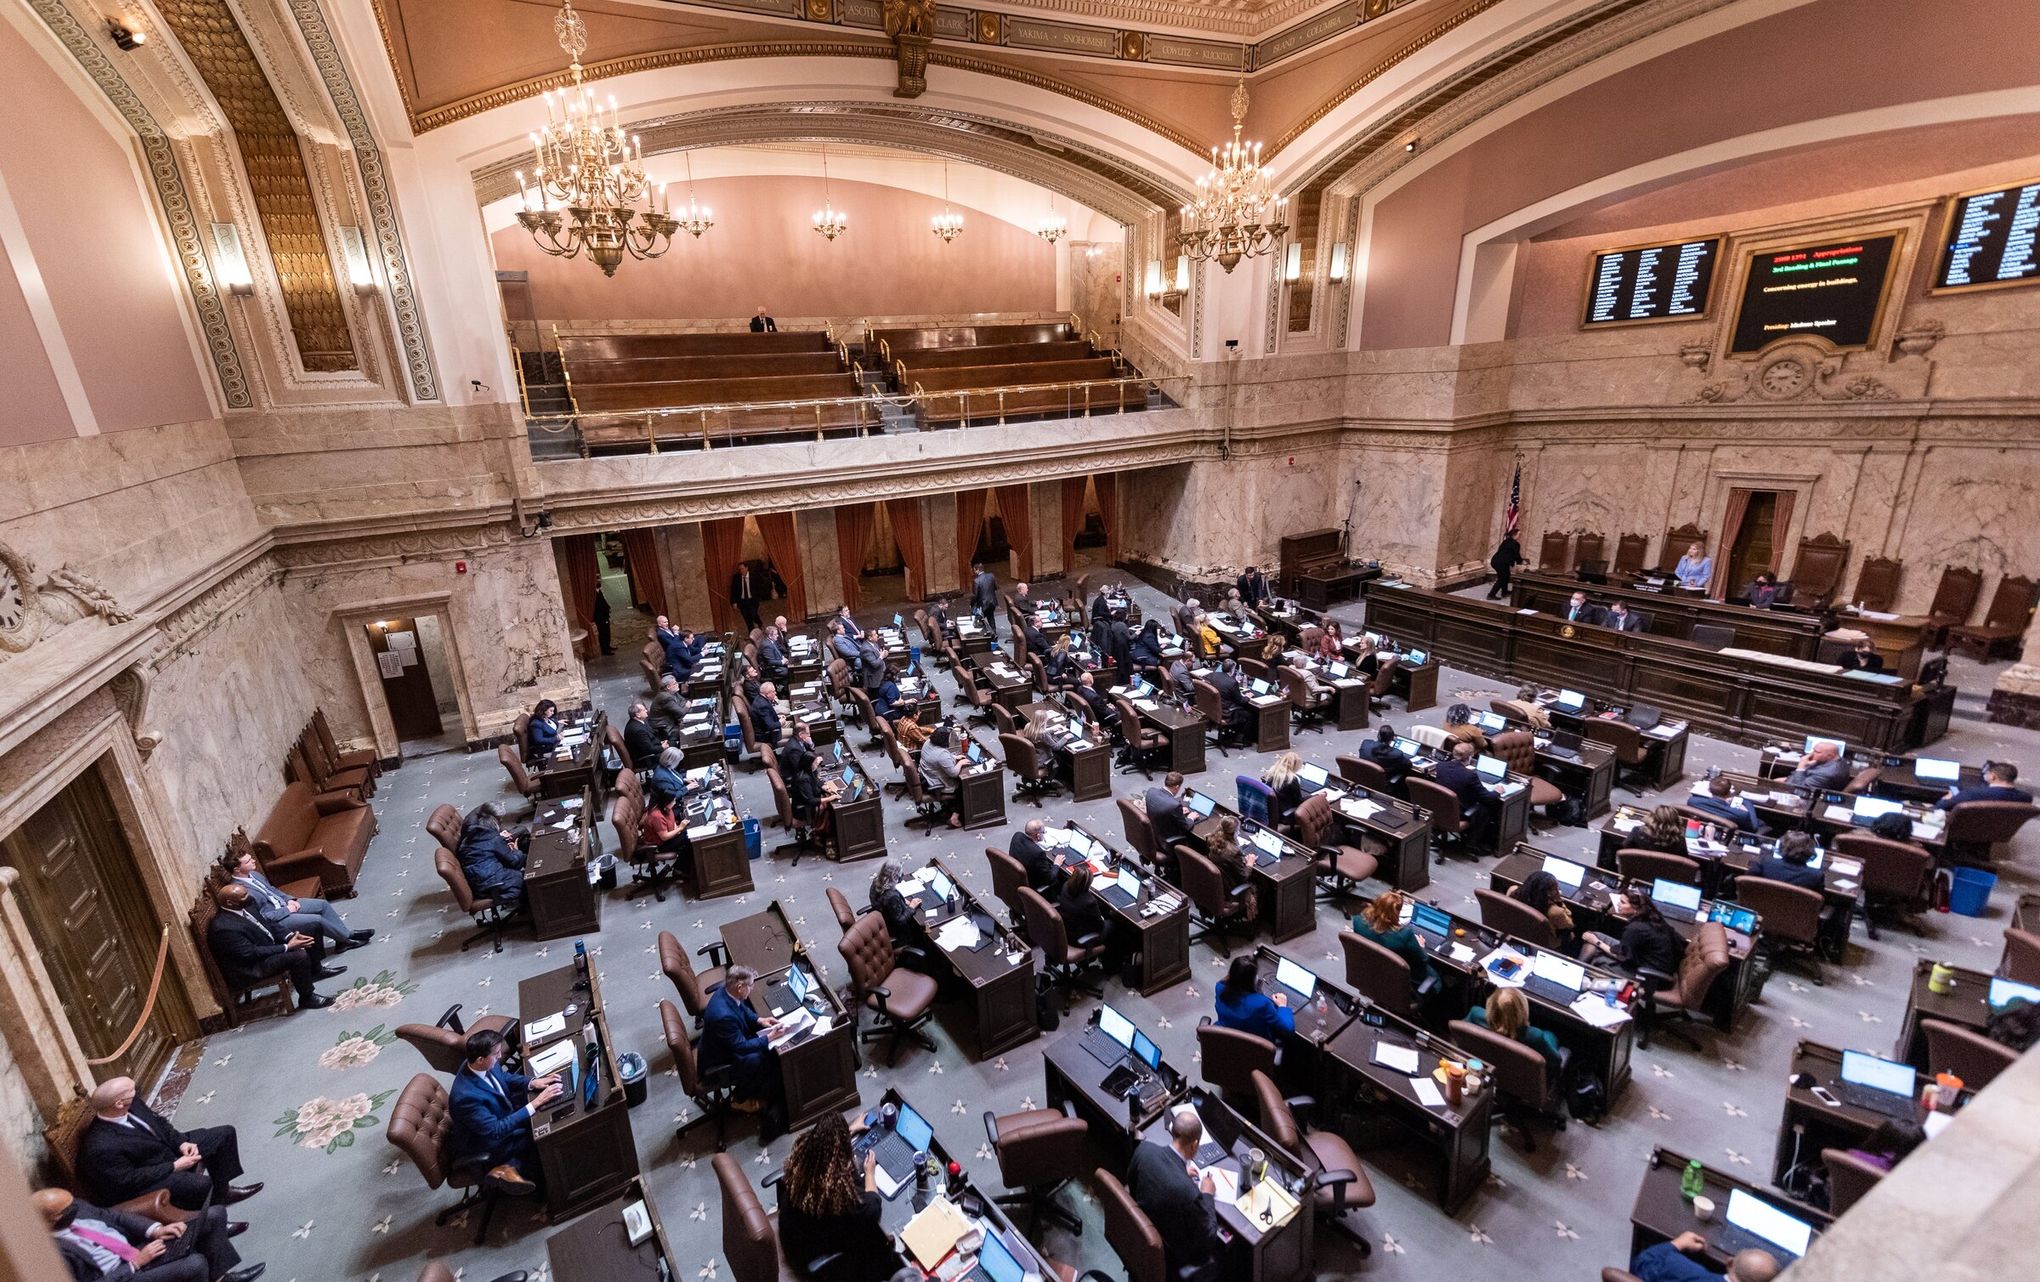 File photo of the Washington House of Representatives chamber